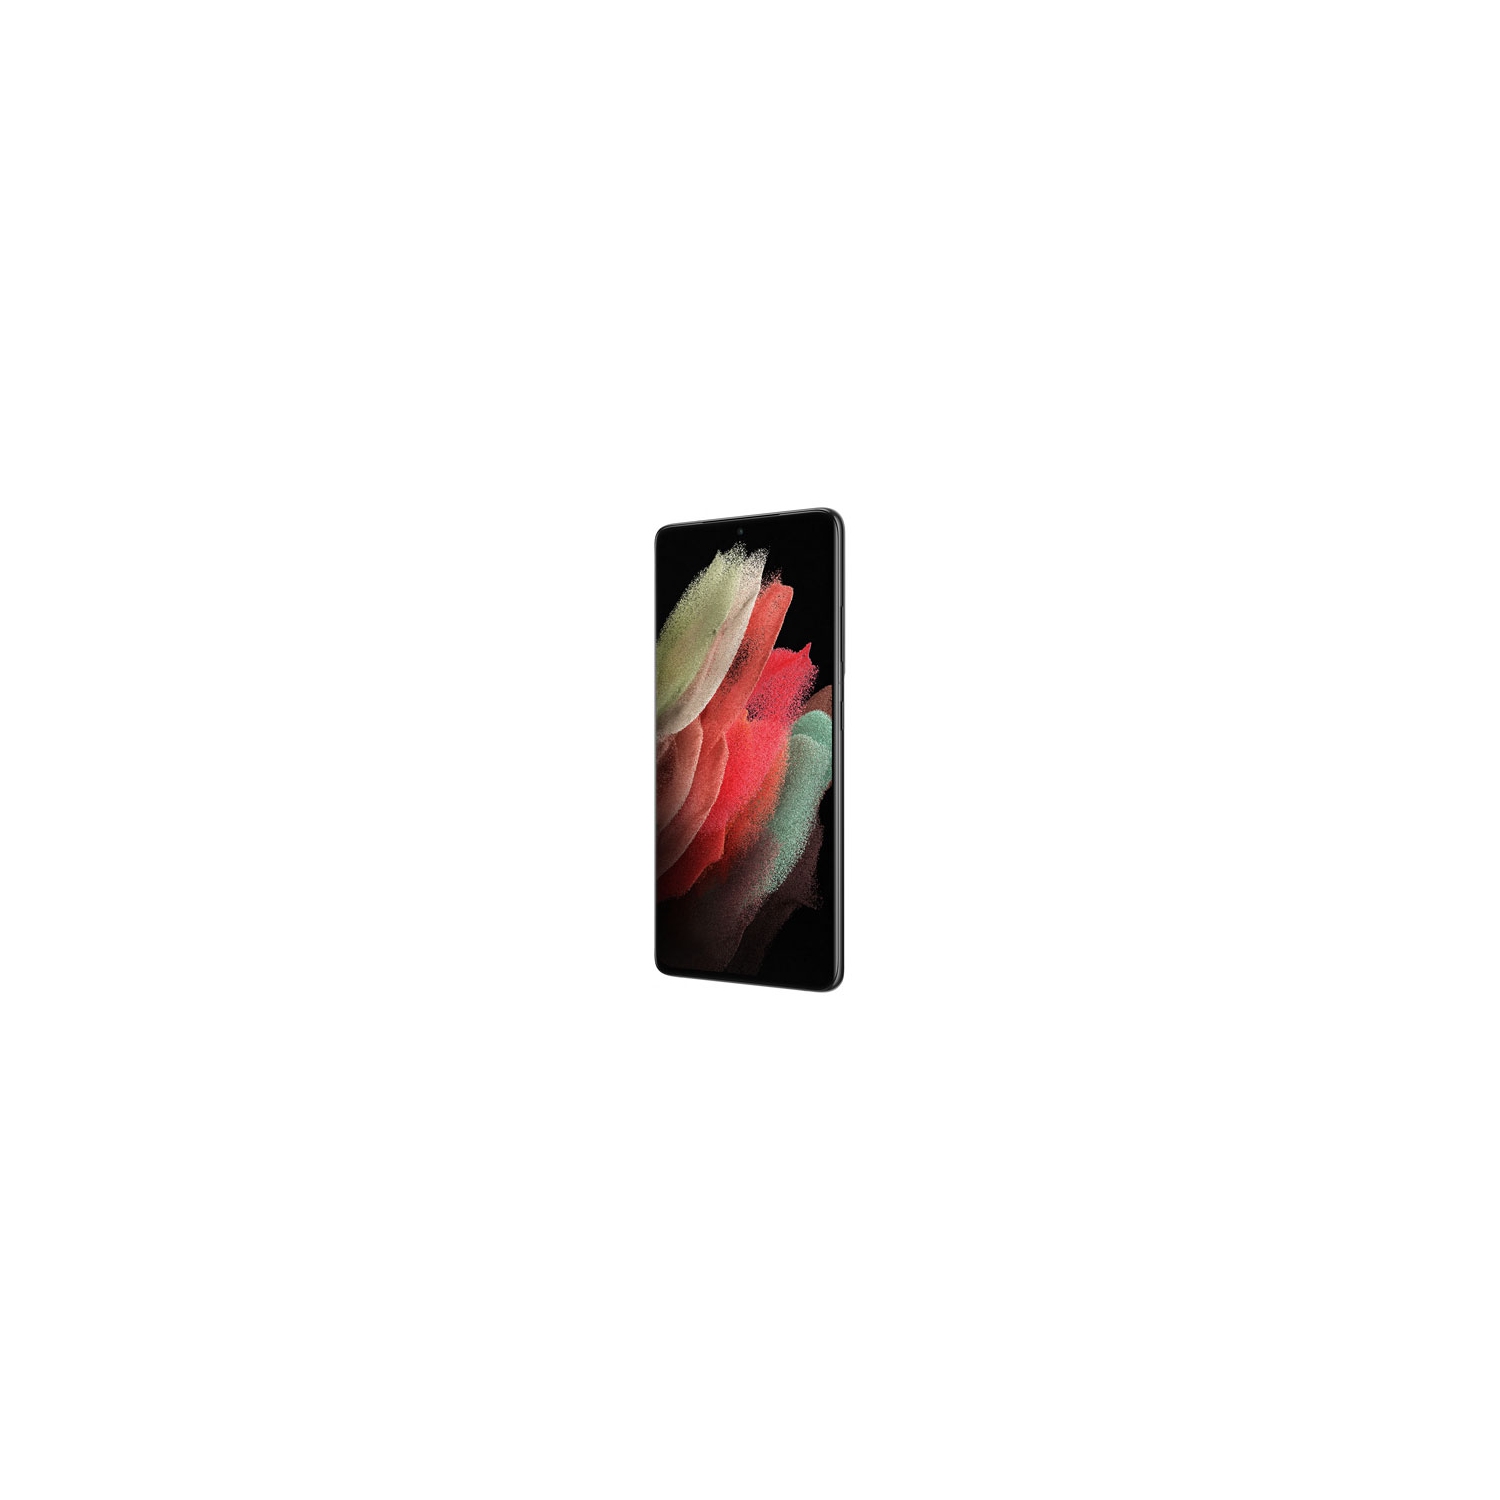 Refurbished (Excellent) - Samsung Galaxy S21 Ultra 5G 512GB - Phantom Black - Unlocked